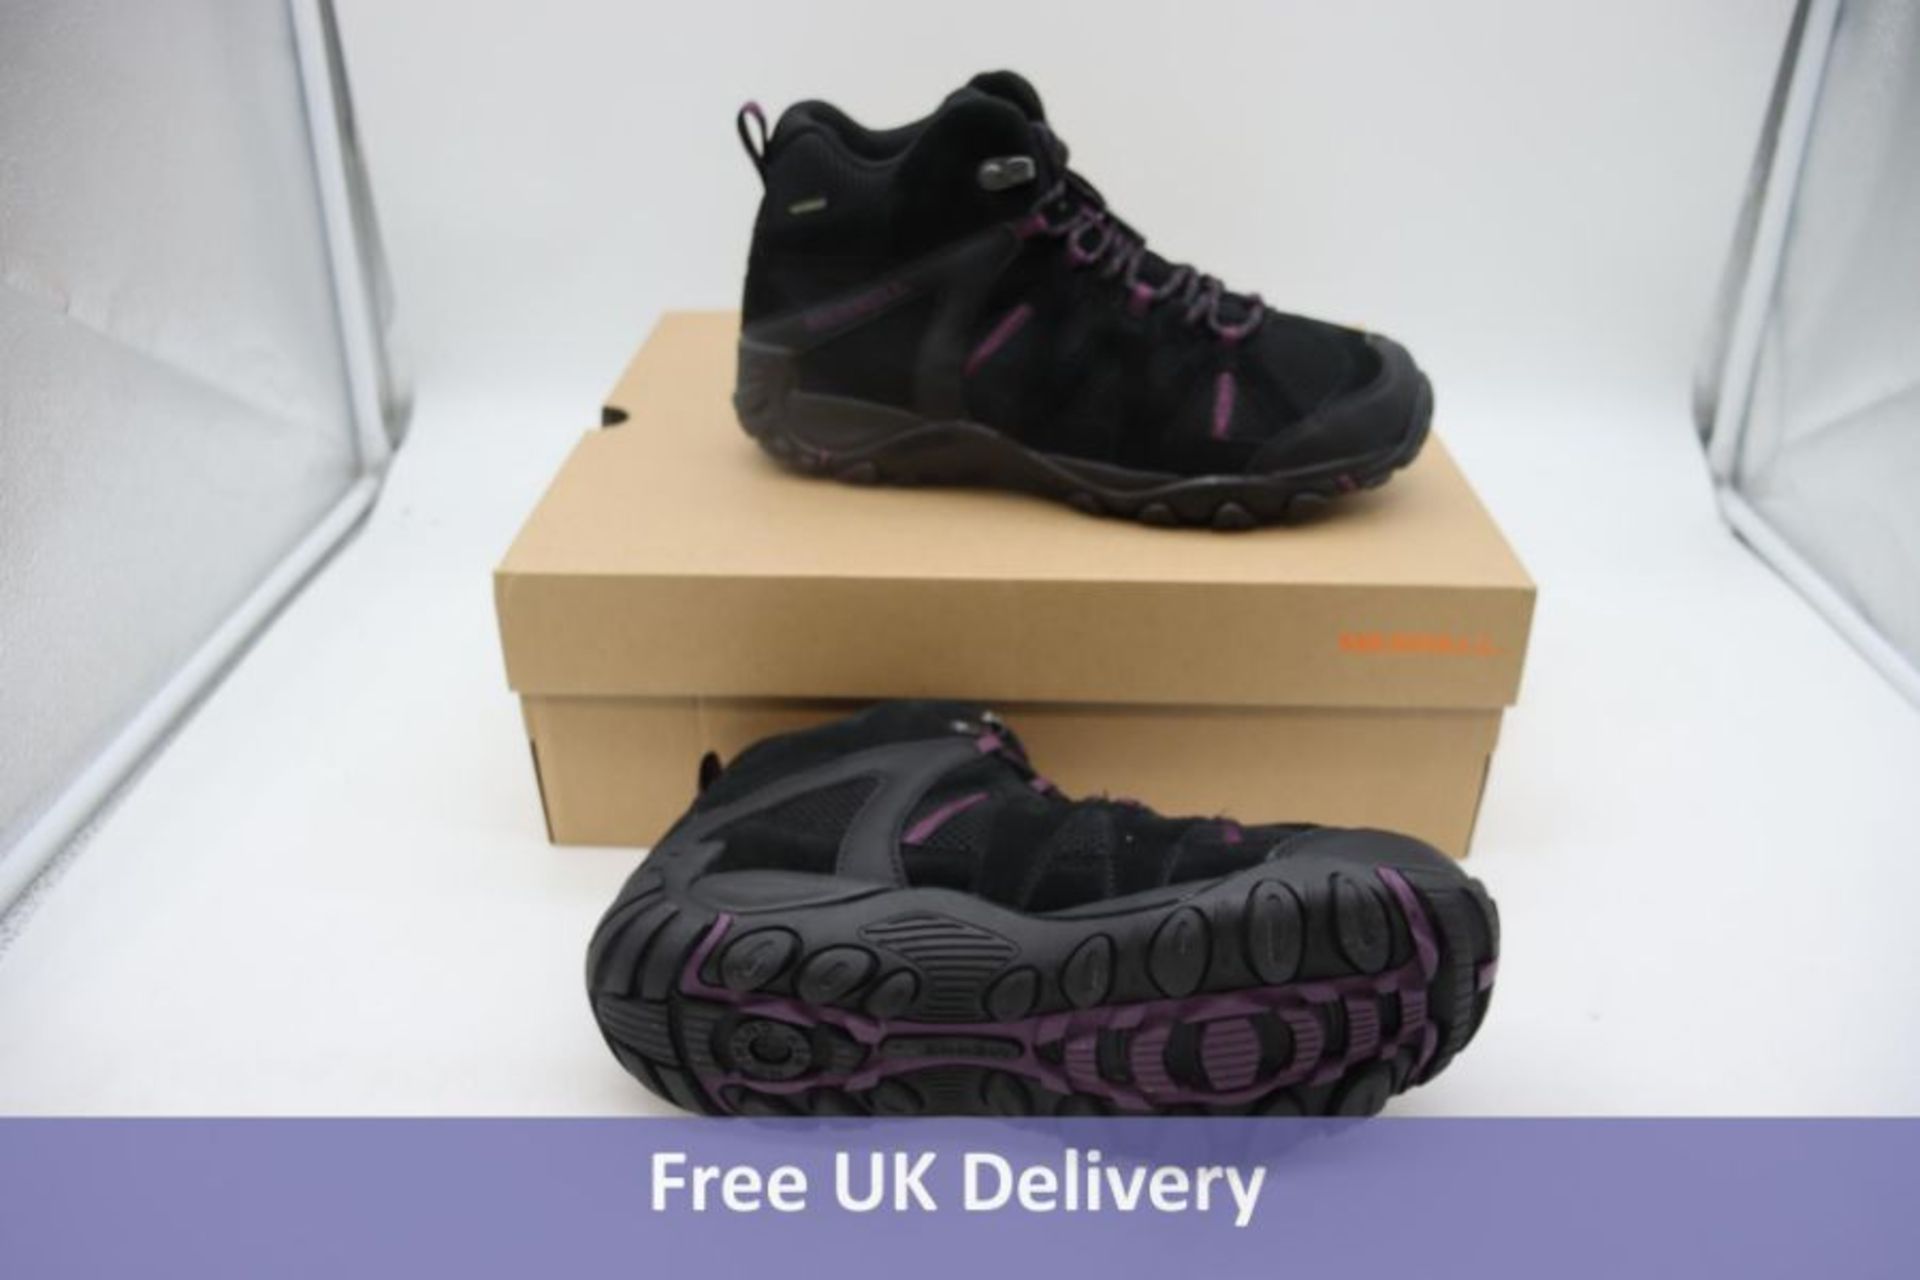 Merrell Women's Deverta 2 Mid Waterproof Boots, Black/Blackberry, UK 6.5